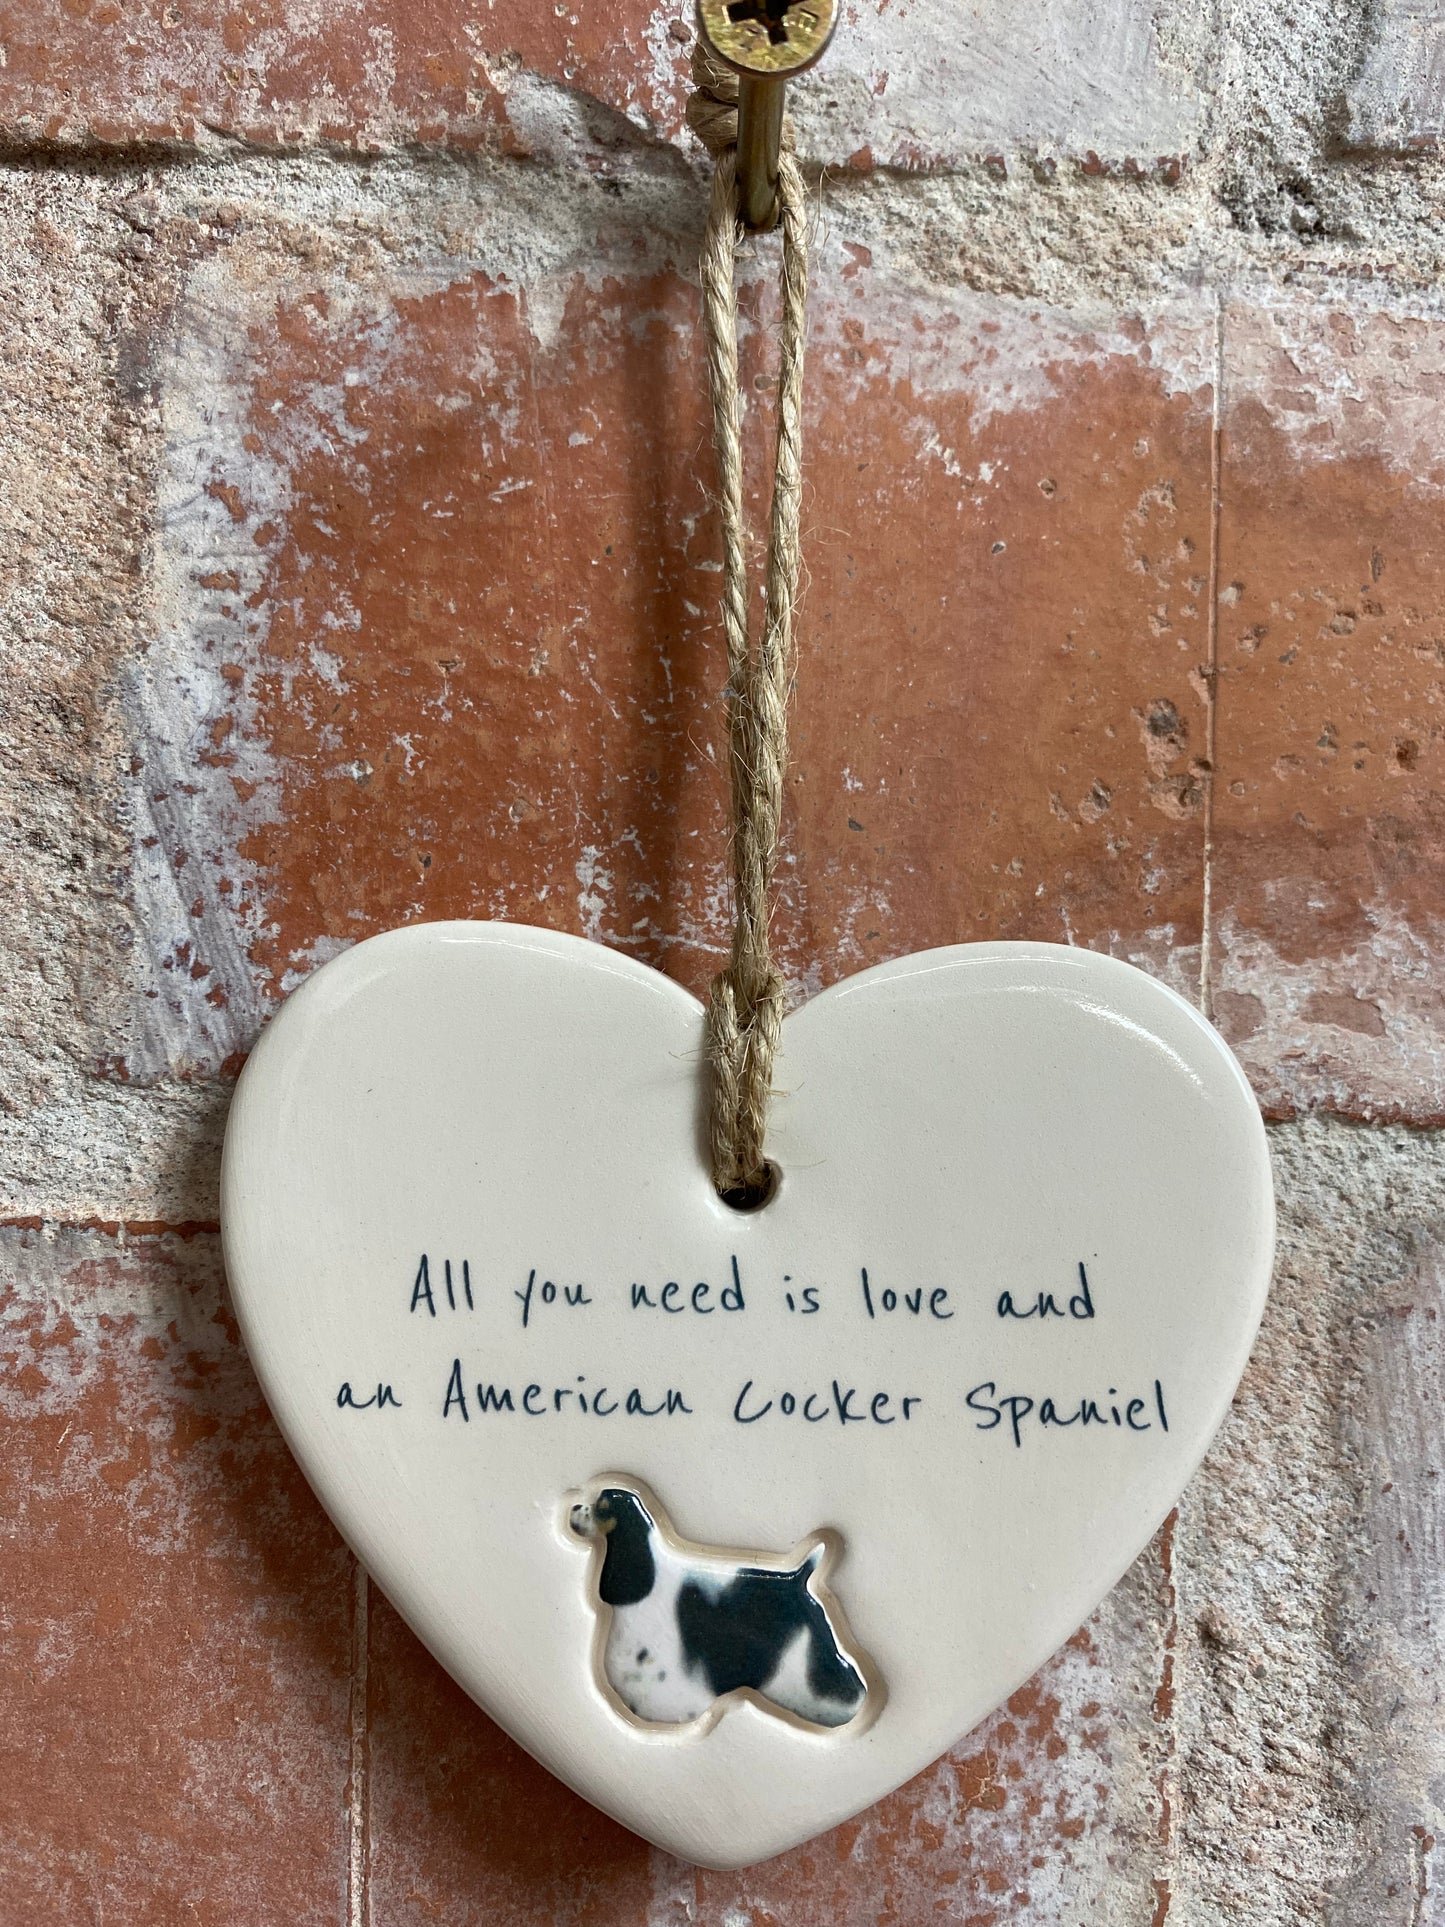 American Cocker Spaniel ceramic heart